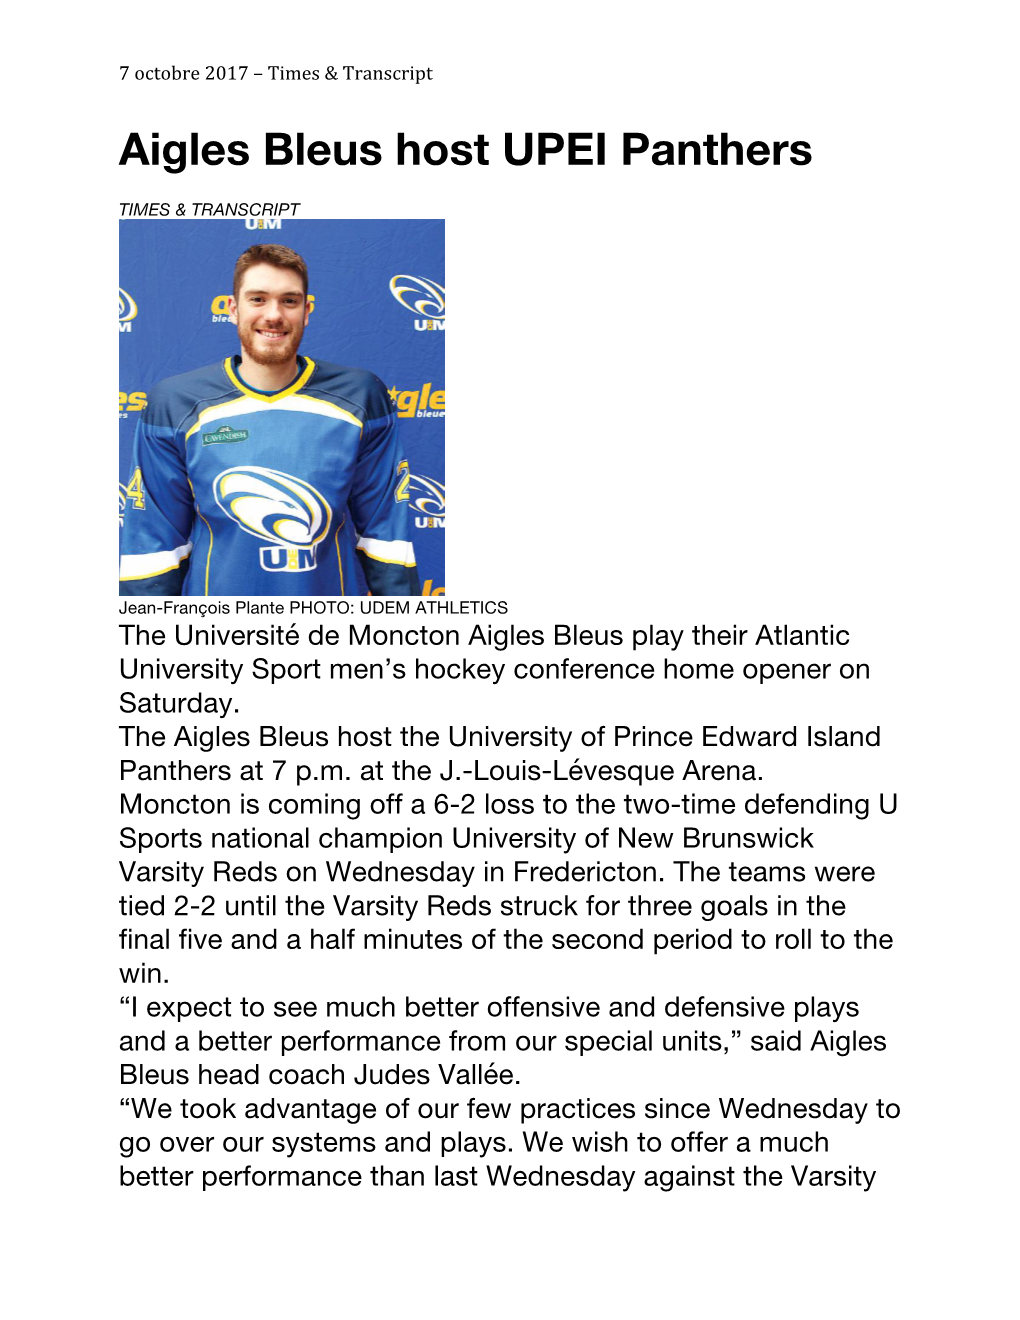 Aigles Bleus Host UPEI Panthers